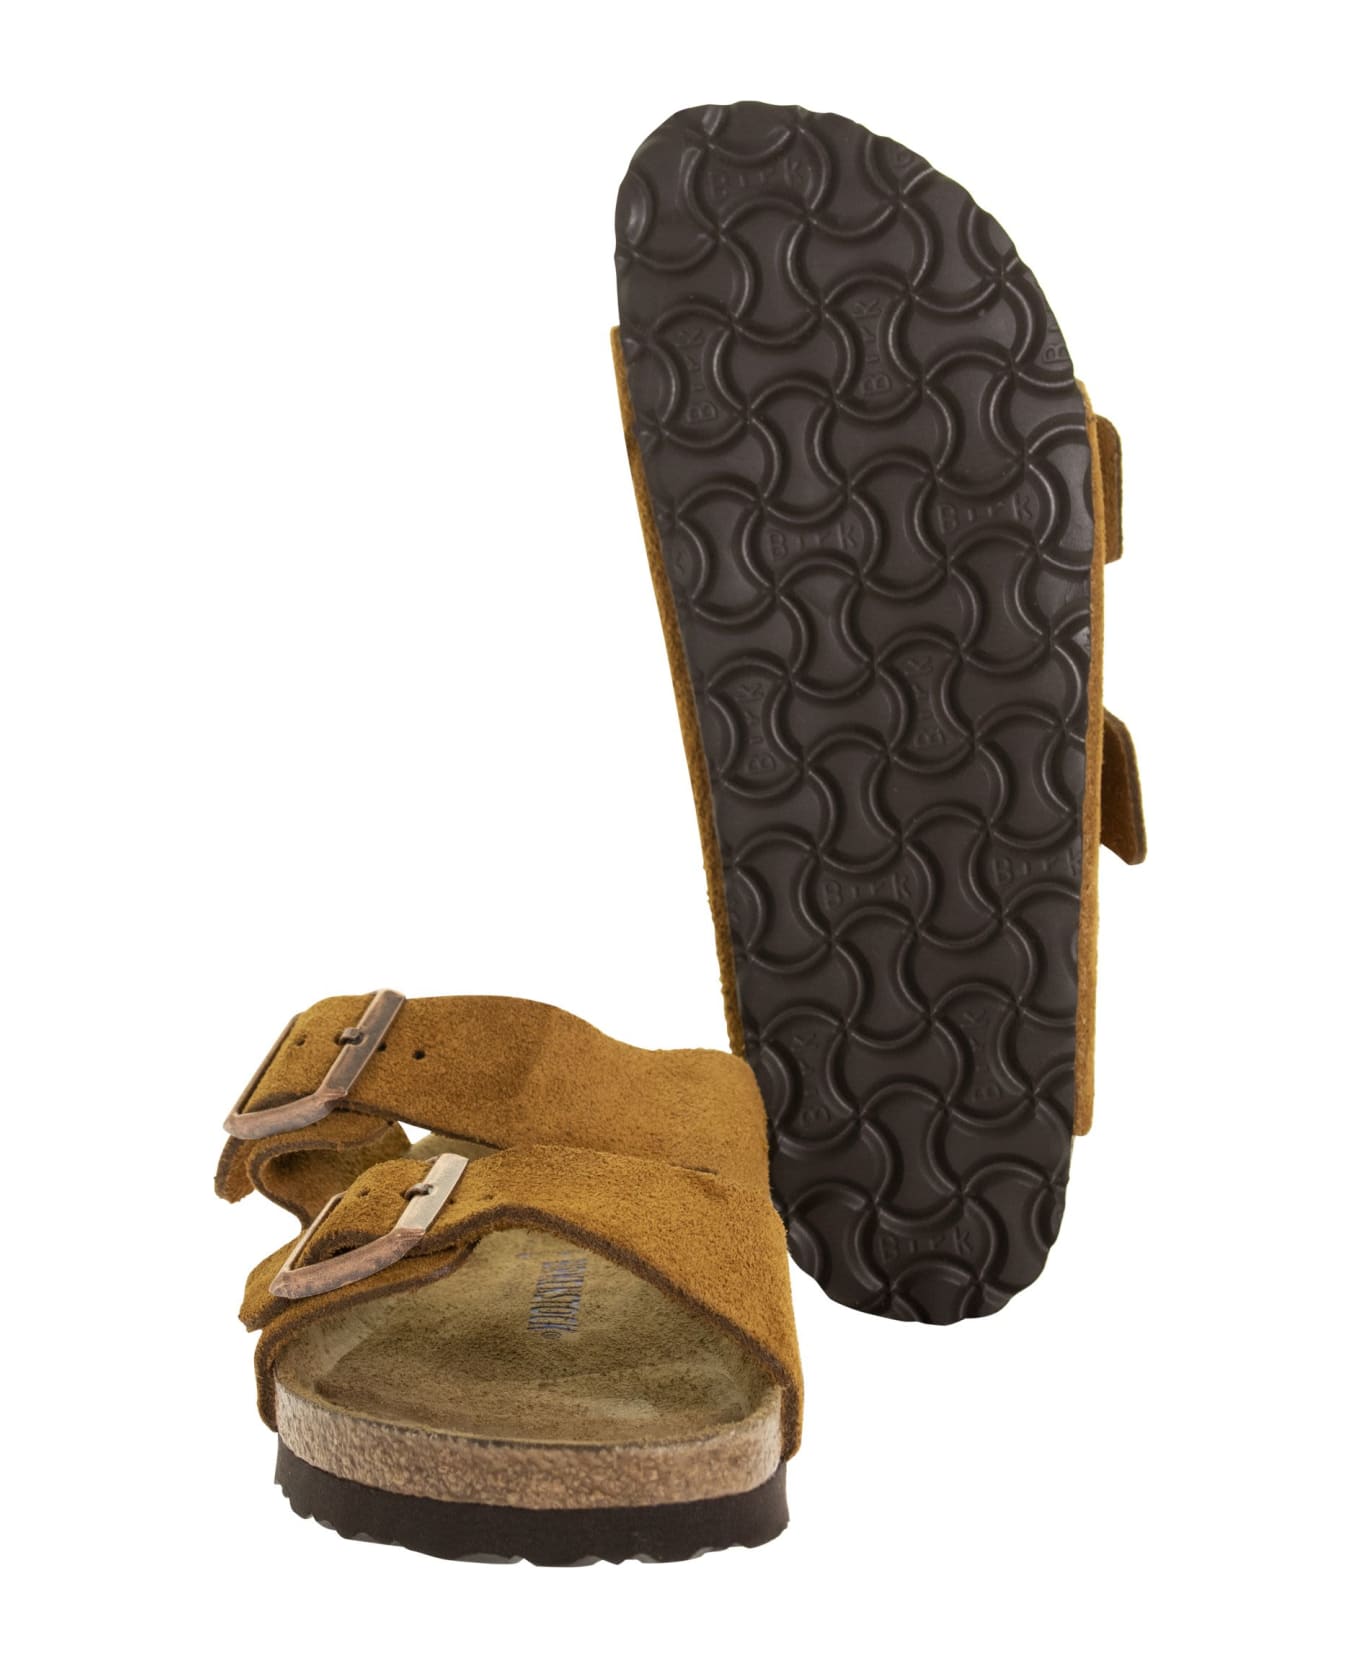 Birkenstock Arizona - Suede Leather Slipper - Mink